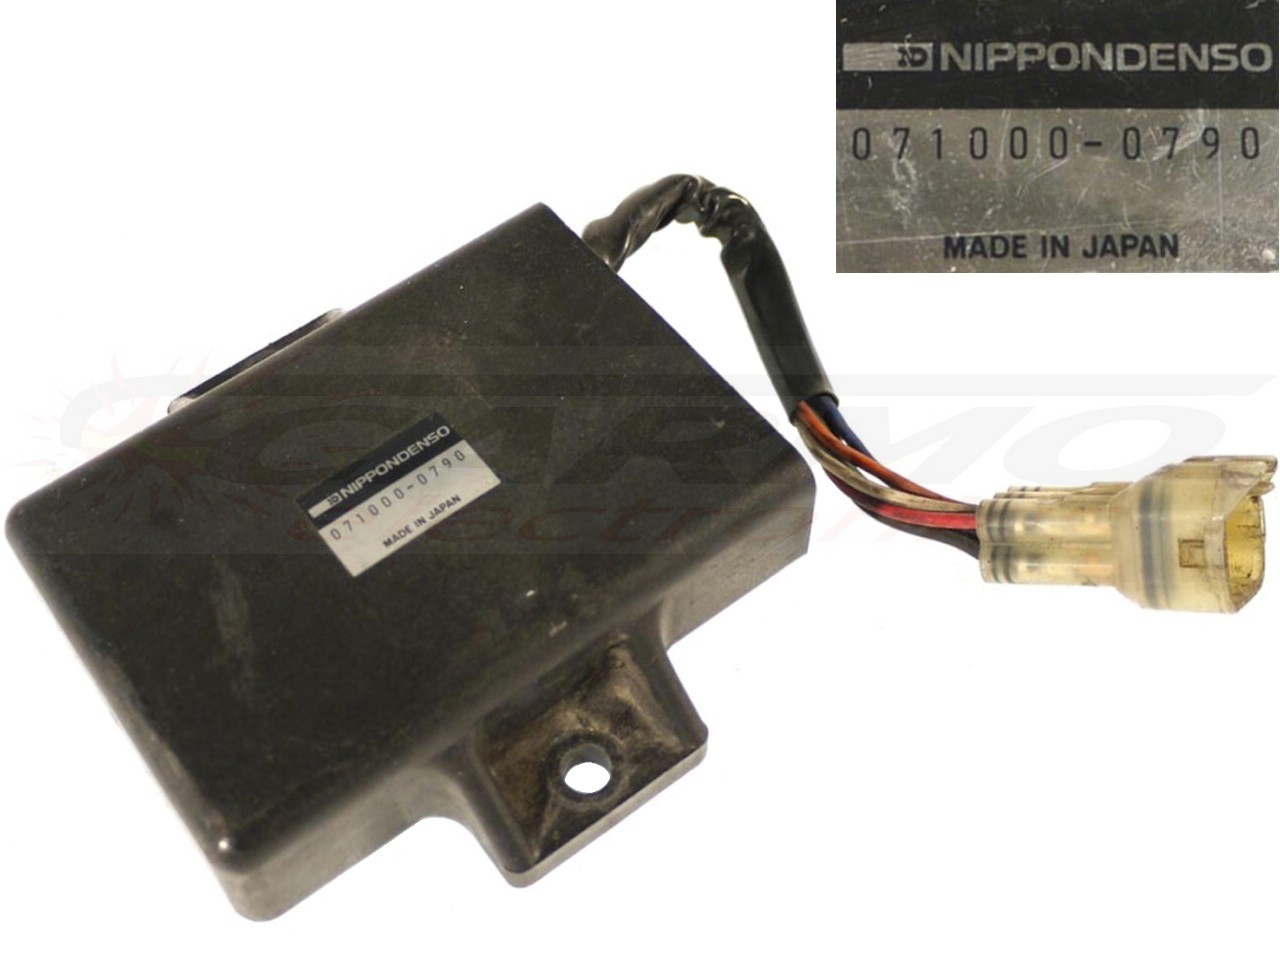 650 Pegaso, Moto 6.5 igniter ignition module CDI TCI Box (NIPPONDENSO, 071000-0790, AP0265365)